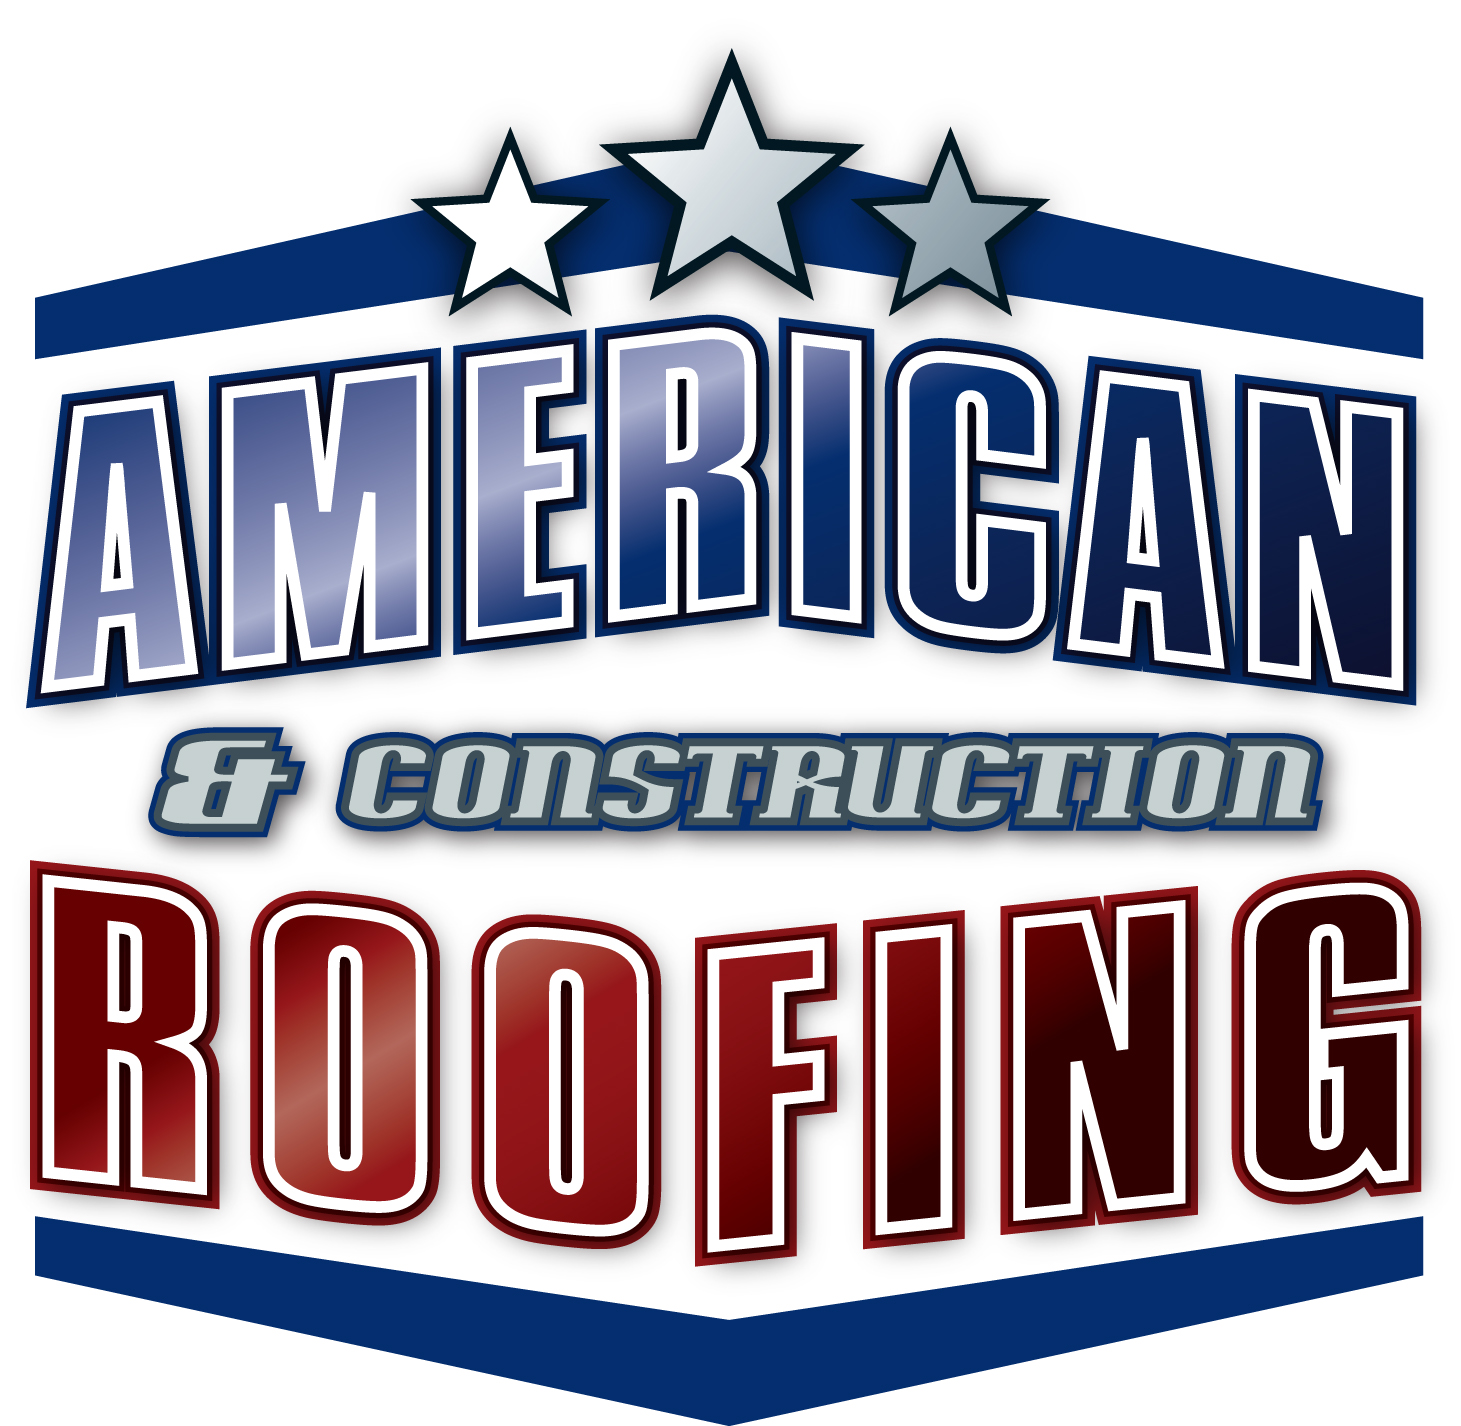 American Roofing & Construction, LLC Logo